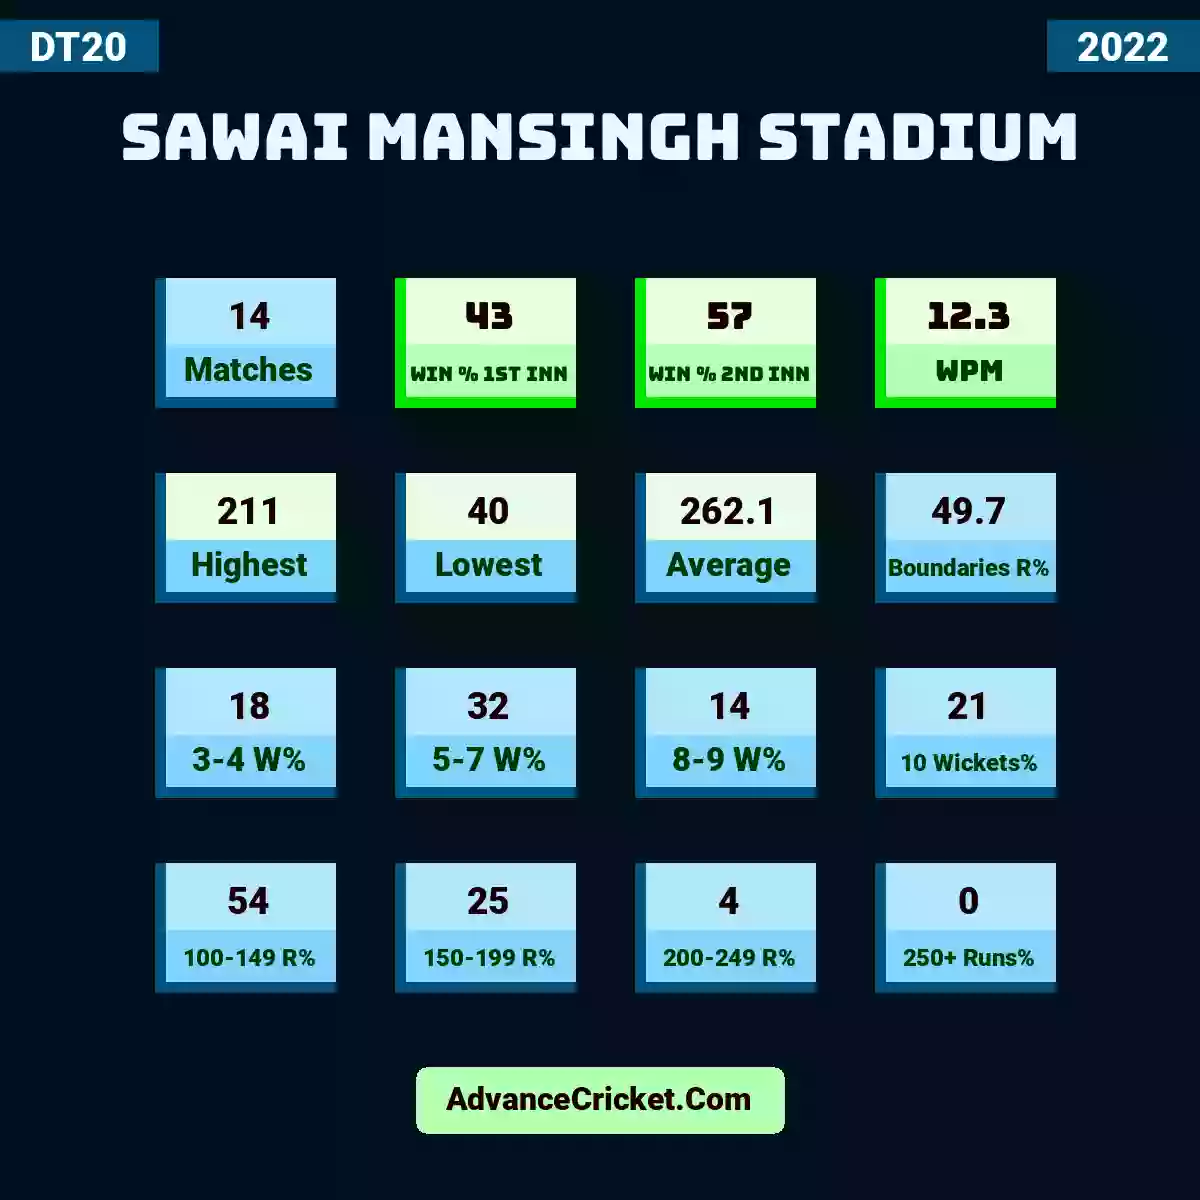 Image showing Sawai Mansingh Stadium with Matches: 14, Win % 1st Inn: 43, Win % 2nd Inn: 57, WPM: 12.3, Highest: 211, Lowest: 40, Average: 262.1, Boundaries R%: 49.7, 3-4 W%: 18, 5-7 W%: 32, 8-9 W%: 14, 10 Wickets%: 21, 100-149 R%: 54, 150-199 R%: 25, 200-249 R%: 4, 250+ Runs%: 0.